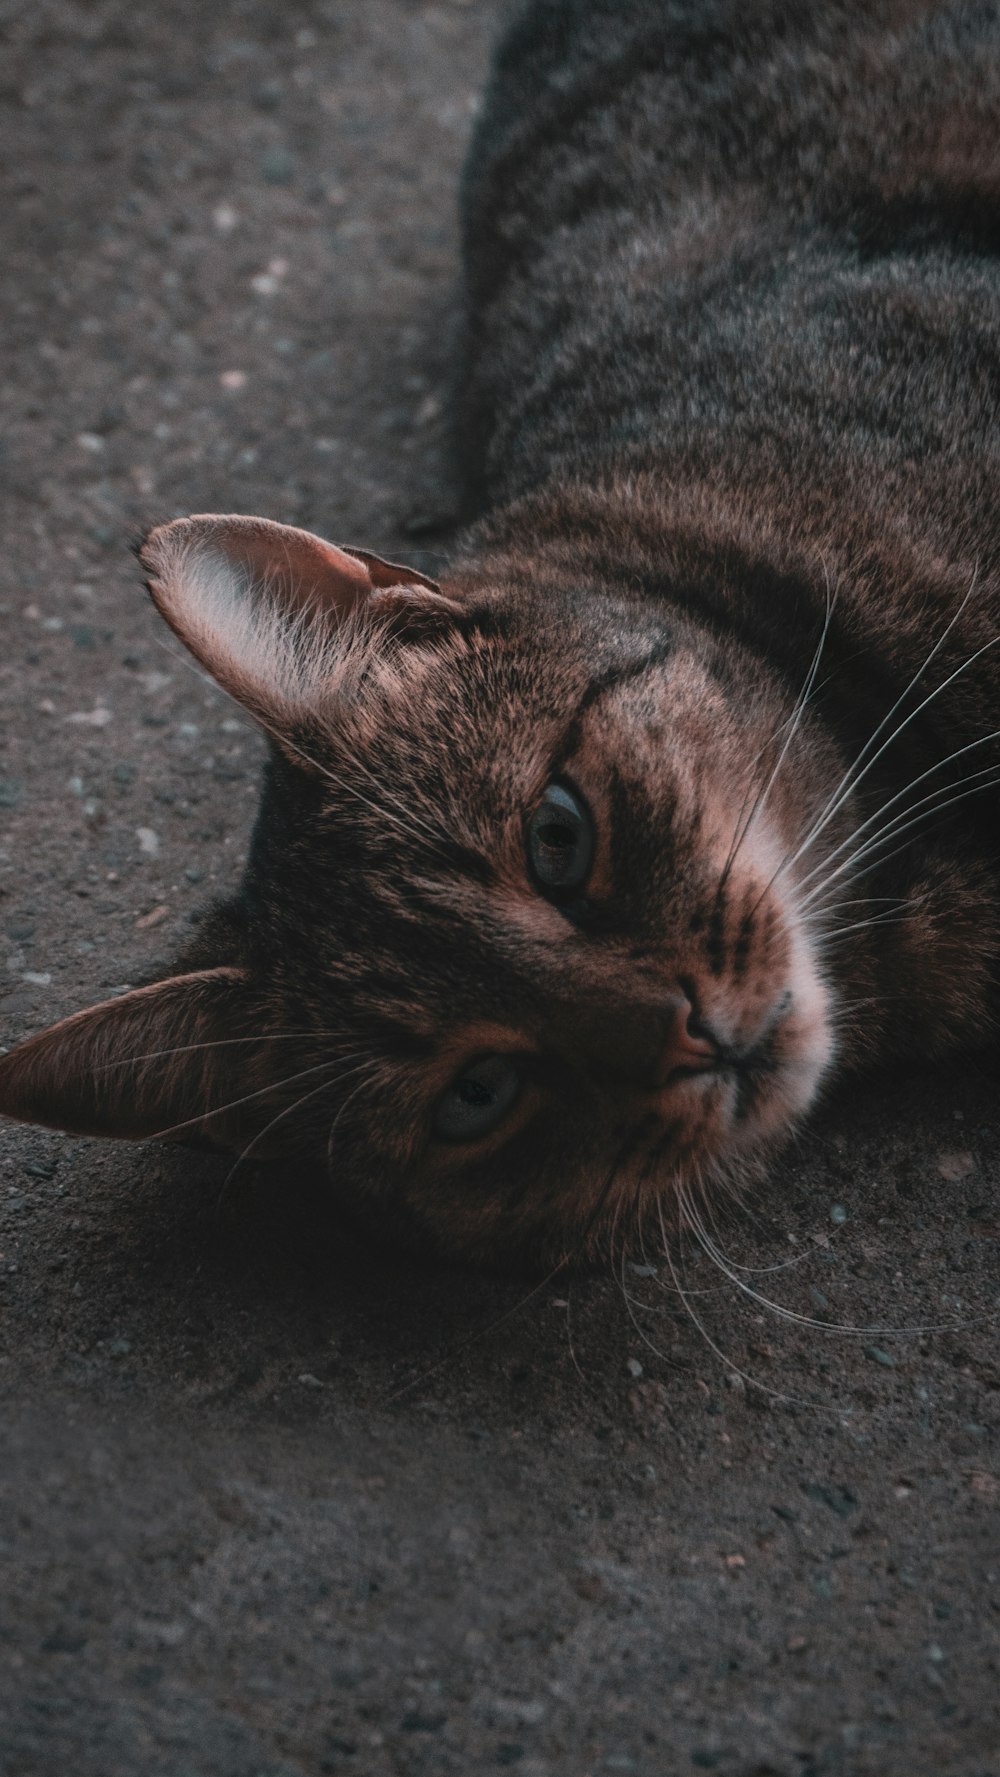 brown tabby cat lying on ground